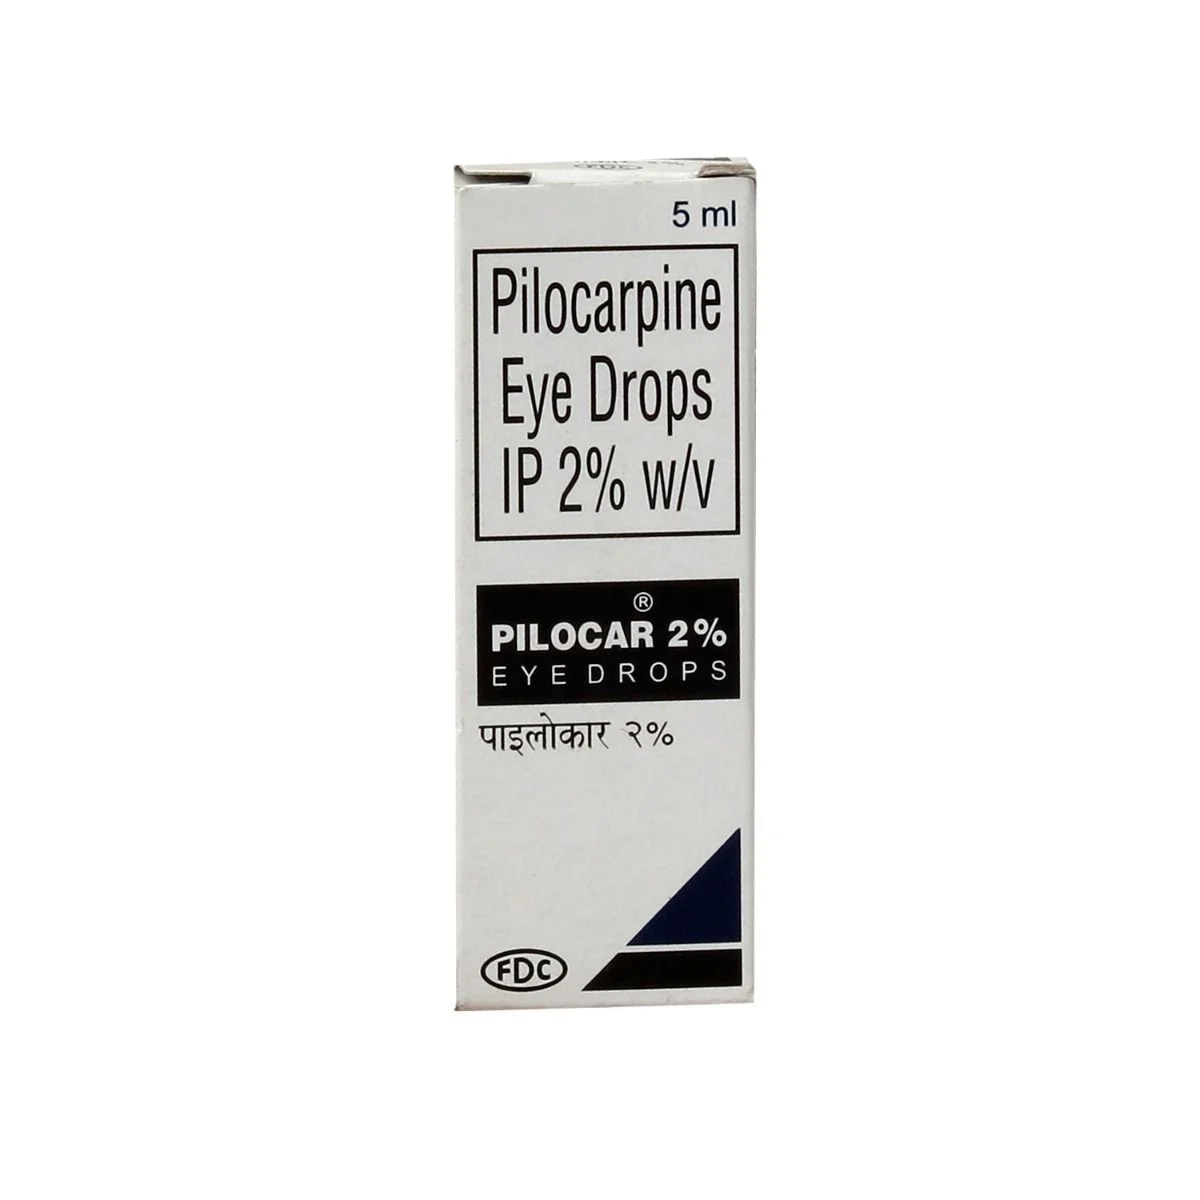 Pilocar 2% eye drop